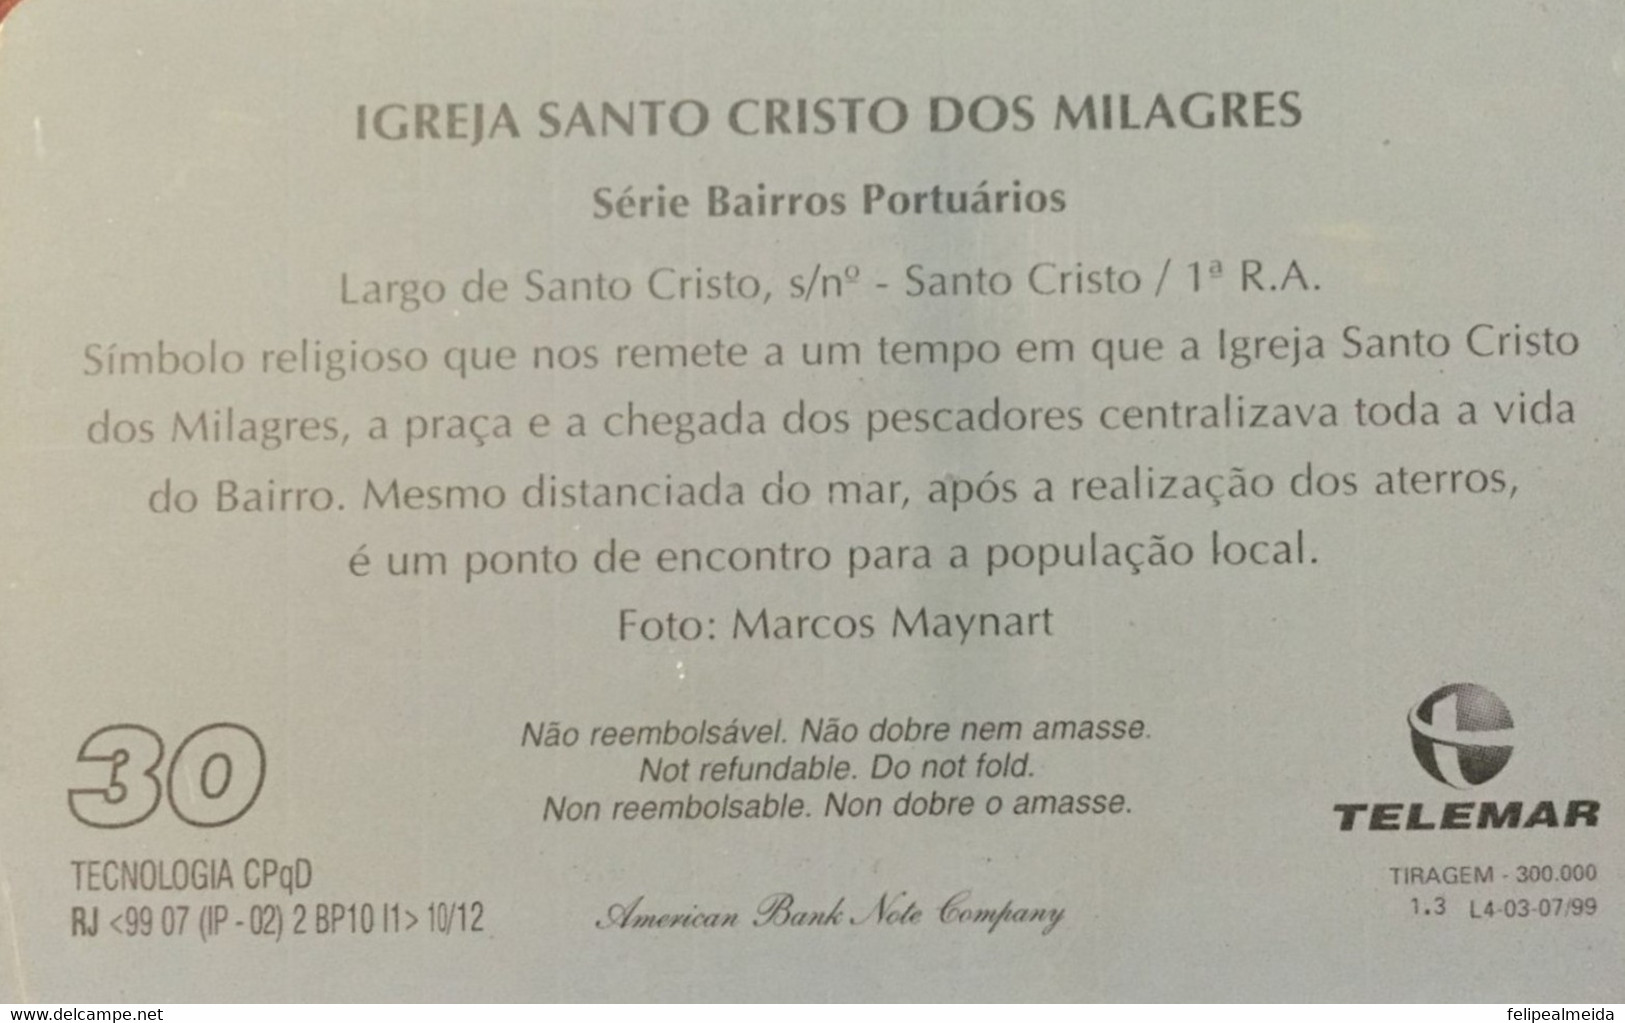 Phone Card Produced By Telemar In 1999 - Bairros Portuários Series - Santo Cristo Dos Milagres Church - Culture